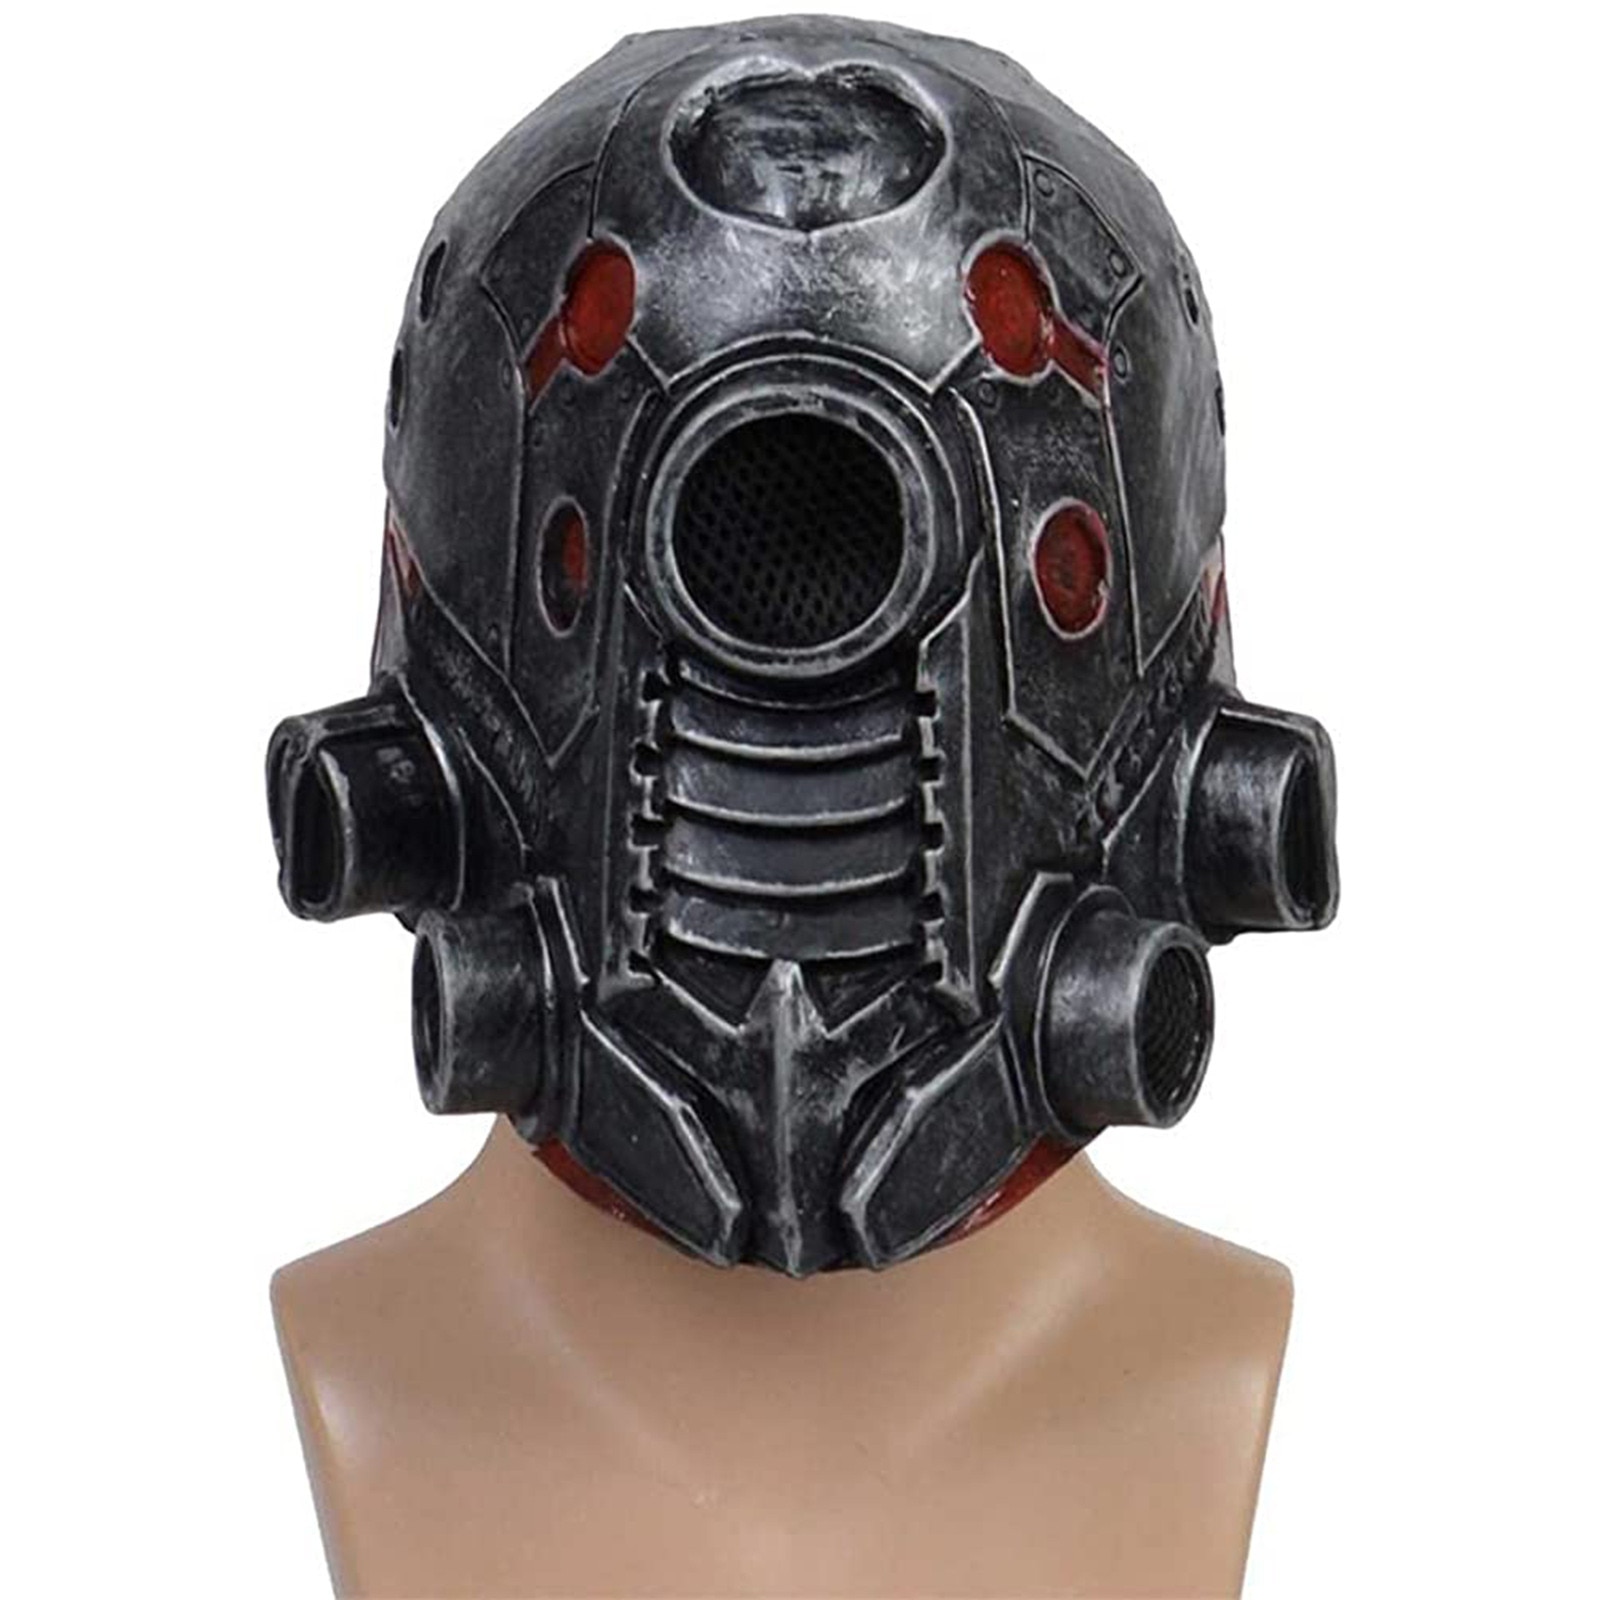 Robot Cyberpunkes Steampunk Mask Cosplay Prop Halloween Masque Helmet Latex Full Head Mask Party Costume Horror Mask Masquerade